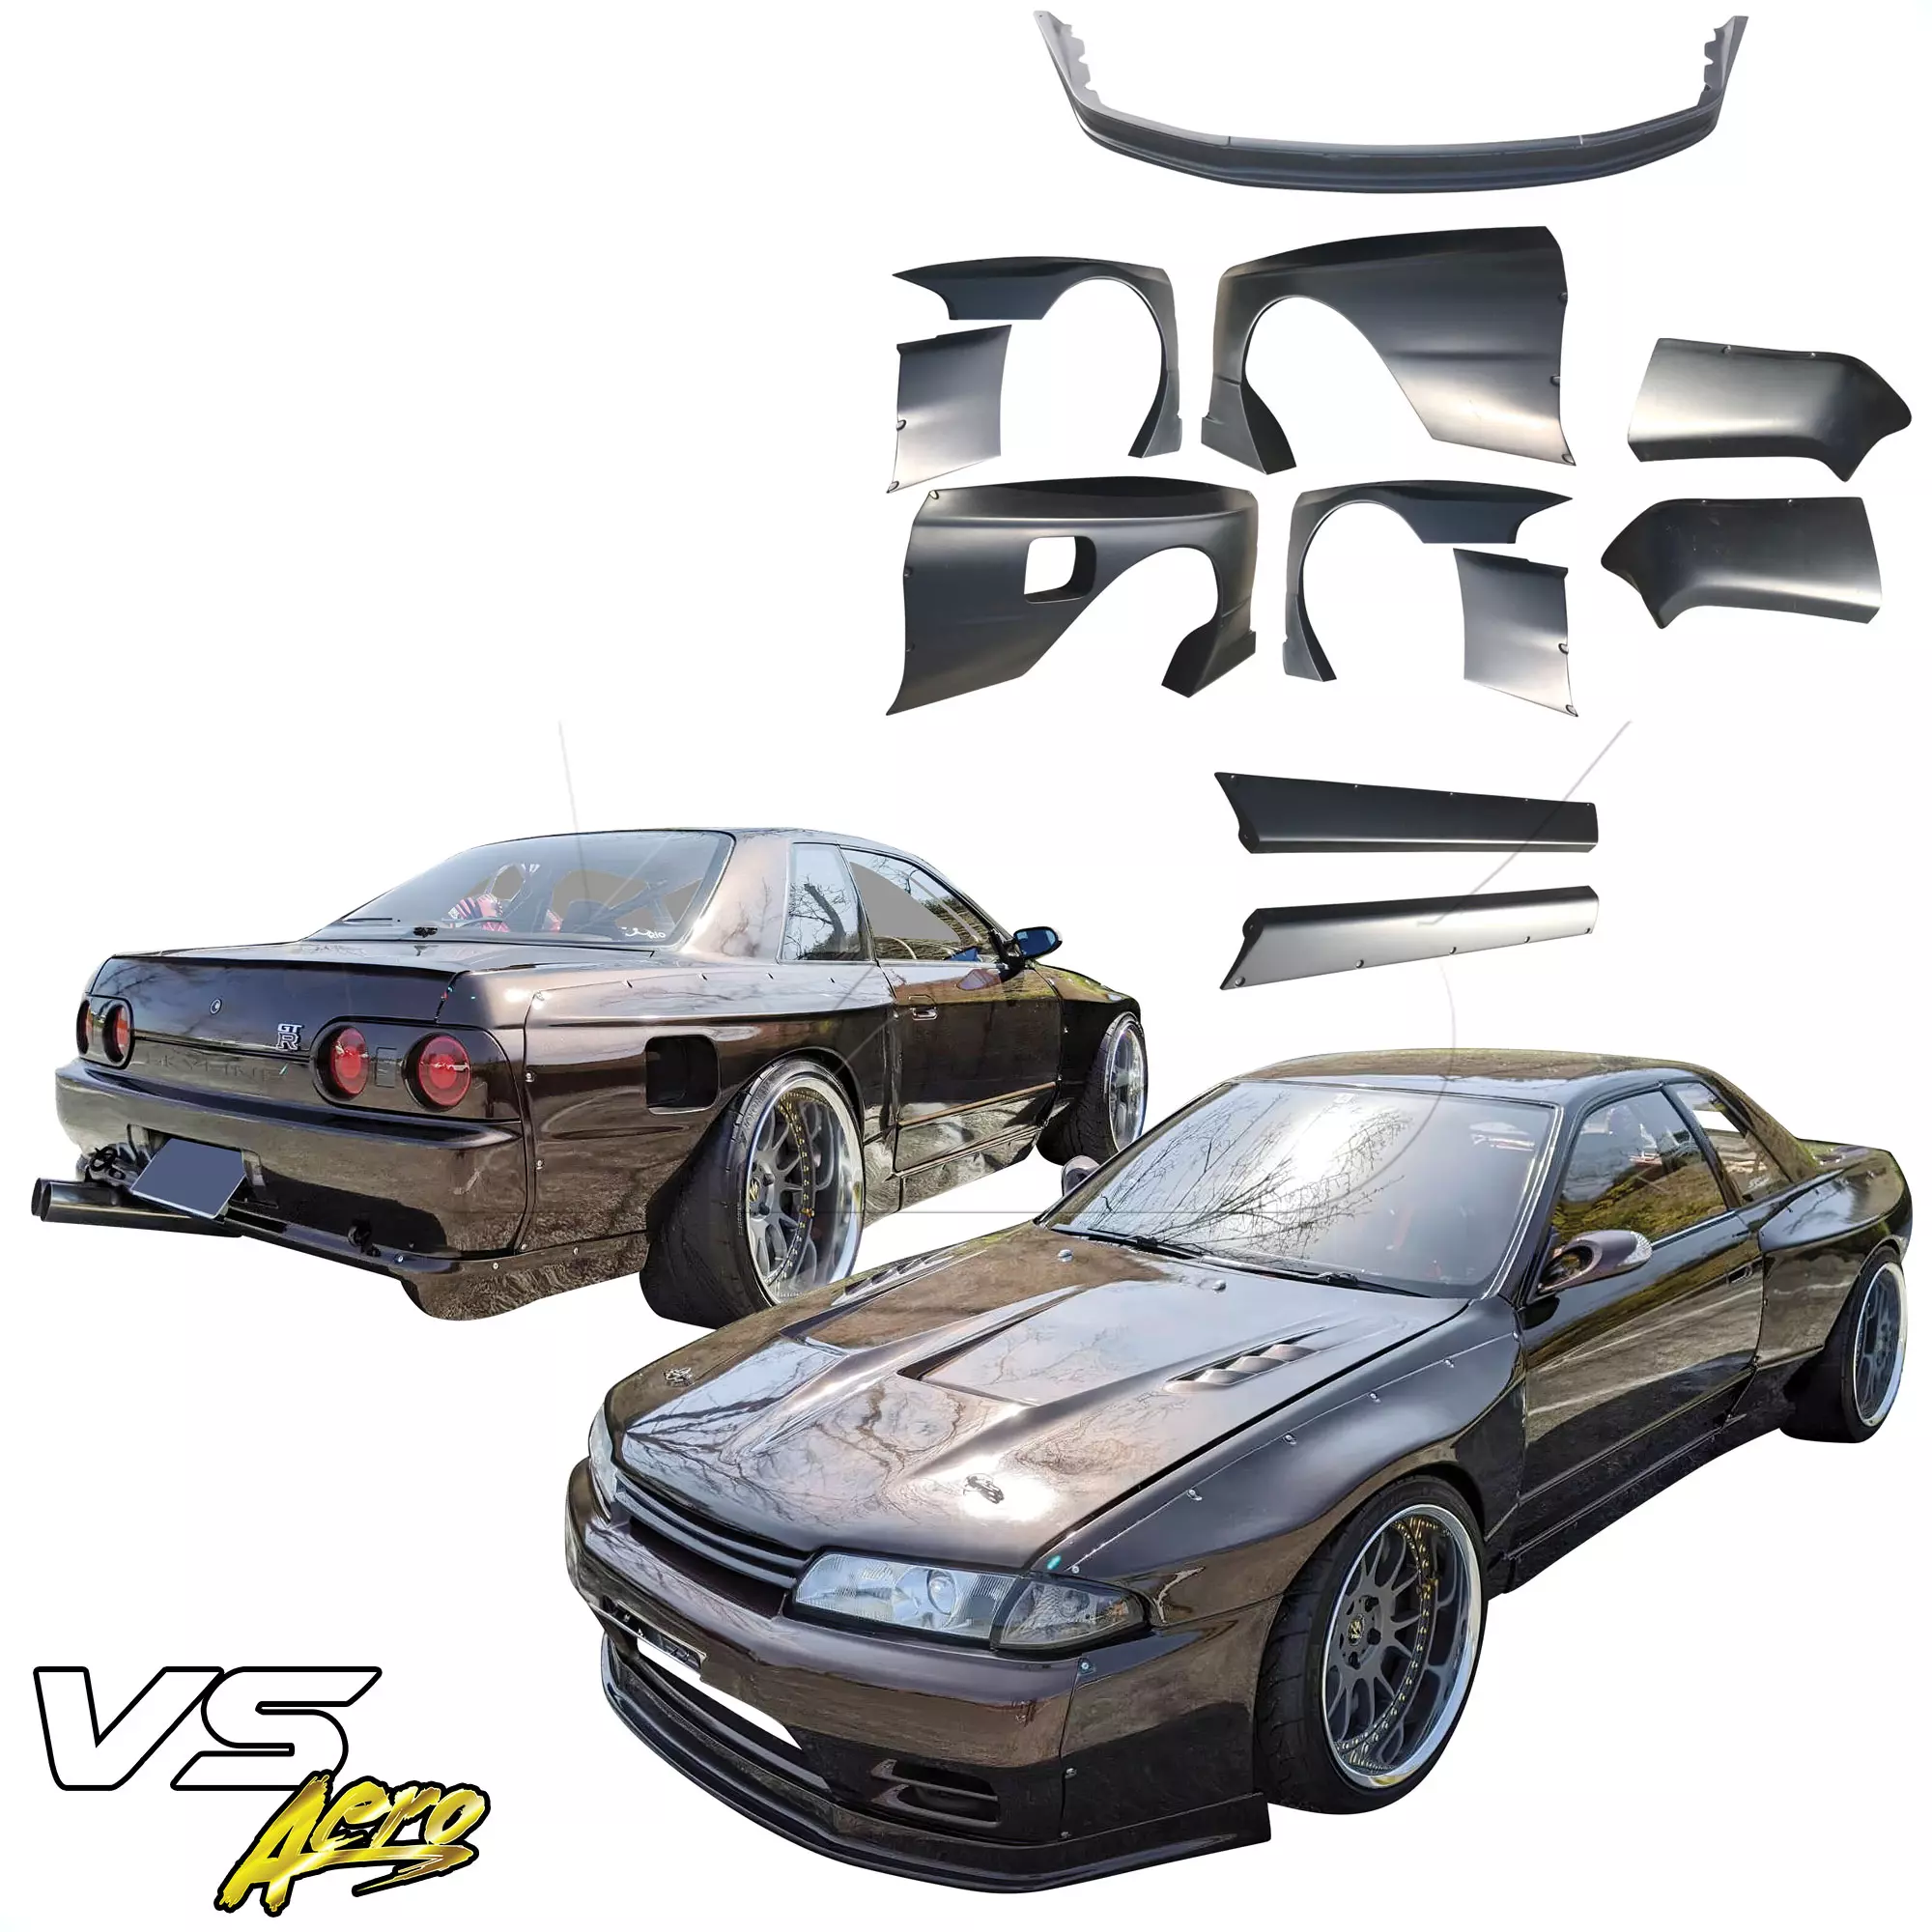 VSaero FRP TKYO Wide Body Kit > Nissan Skyline R32 1990-1994 > 2dr Coupe - Image 3